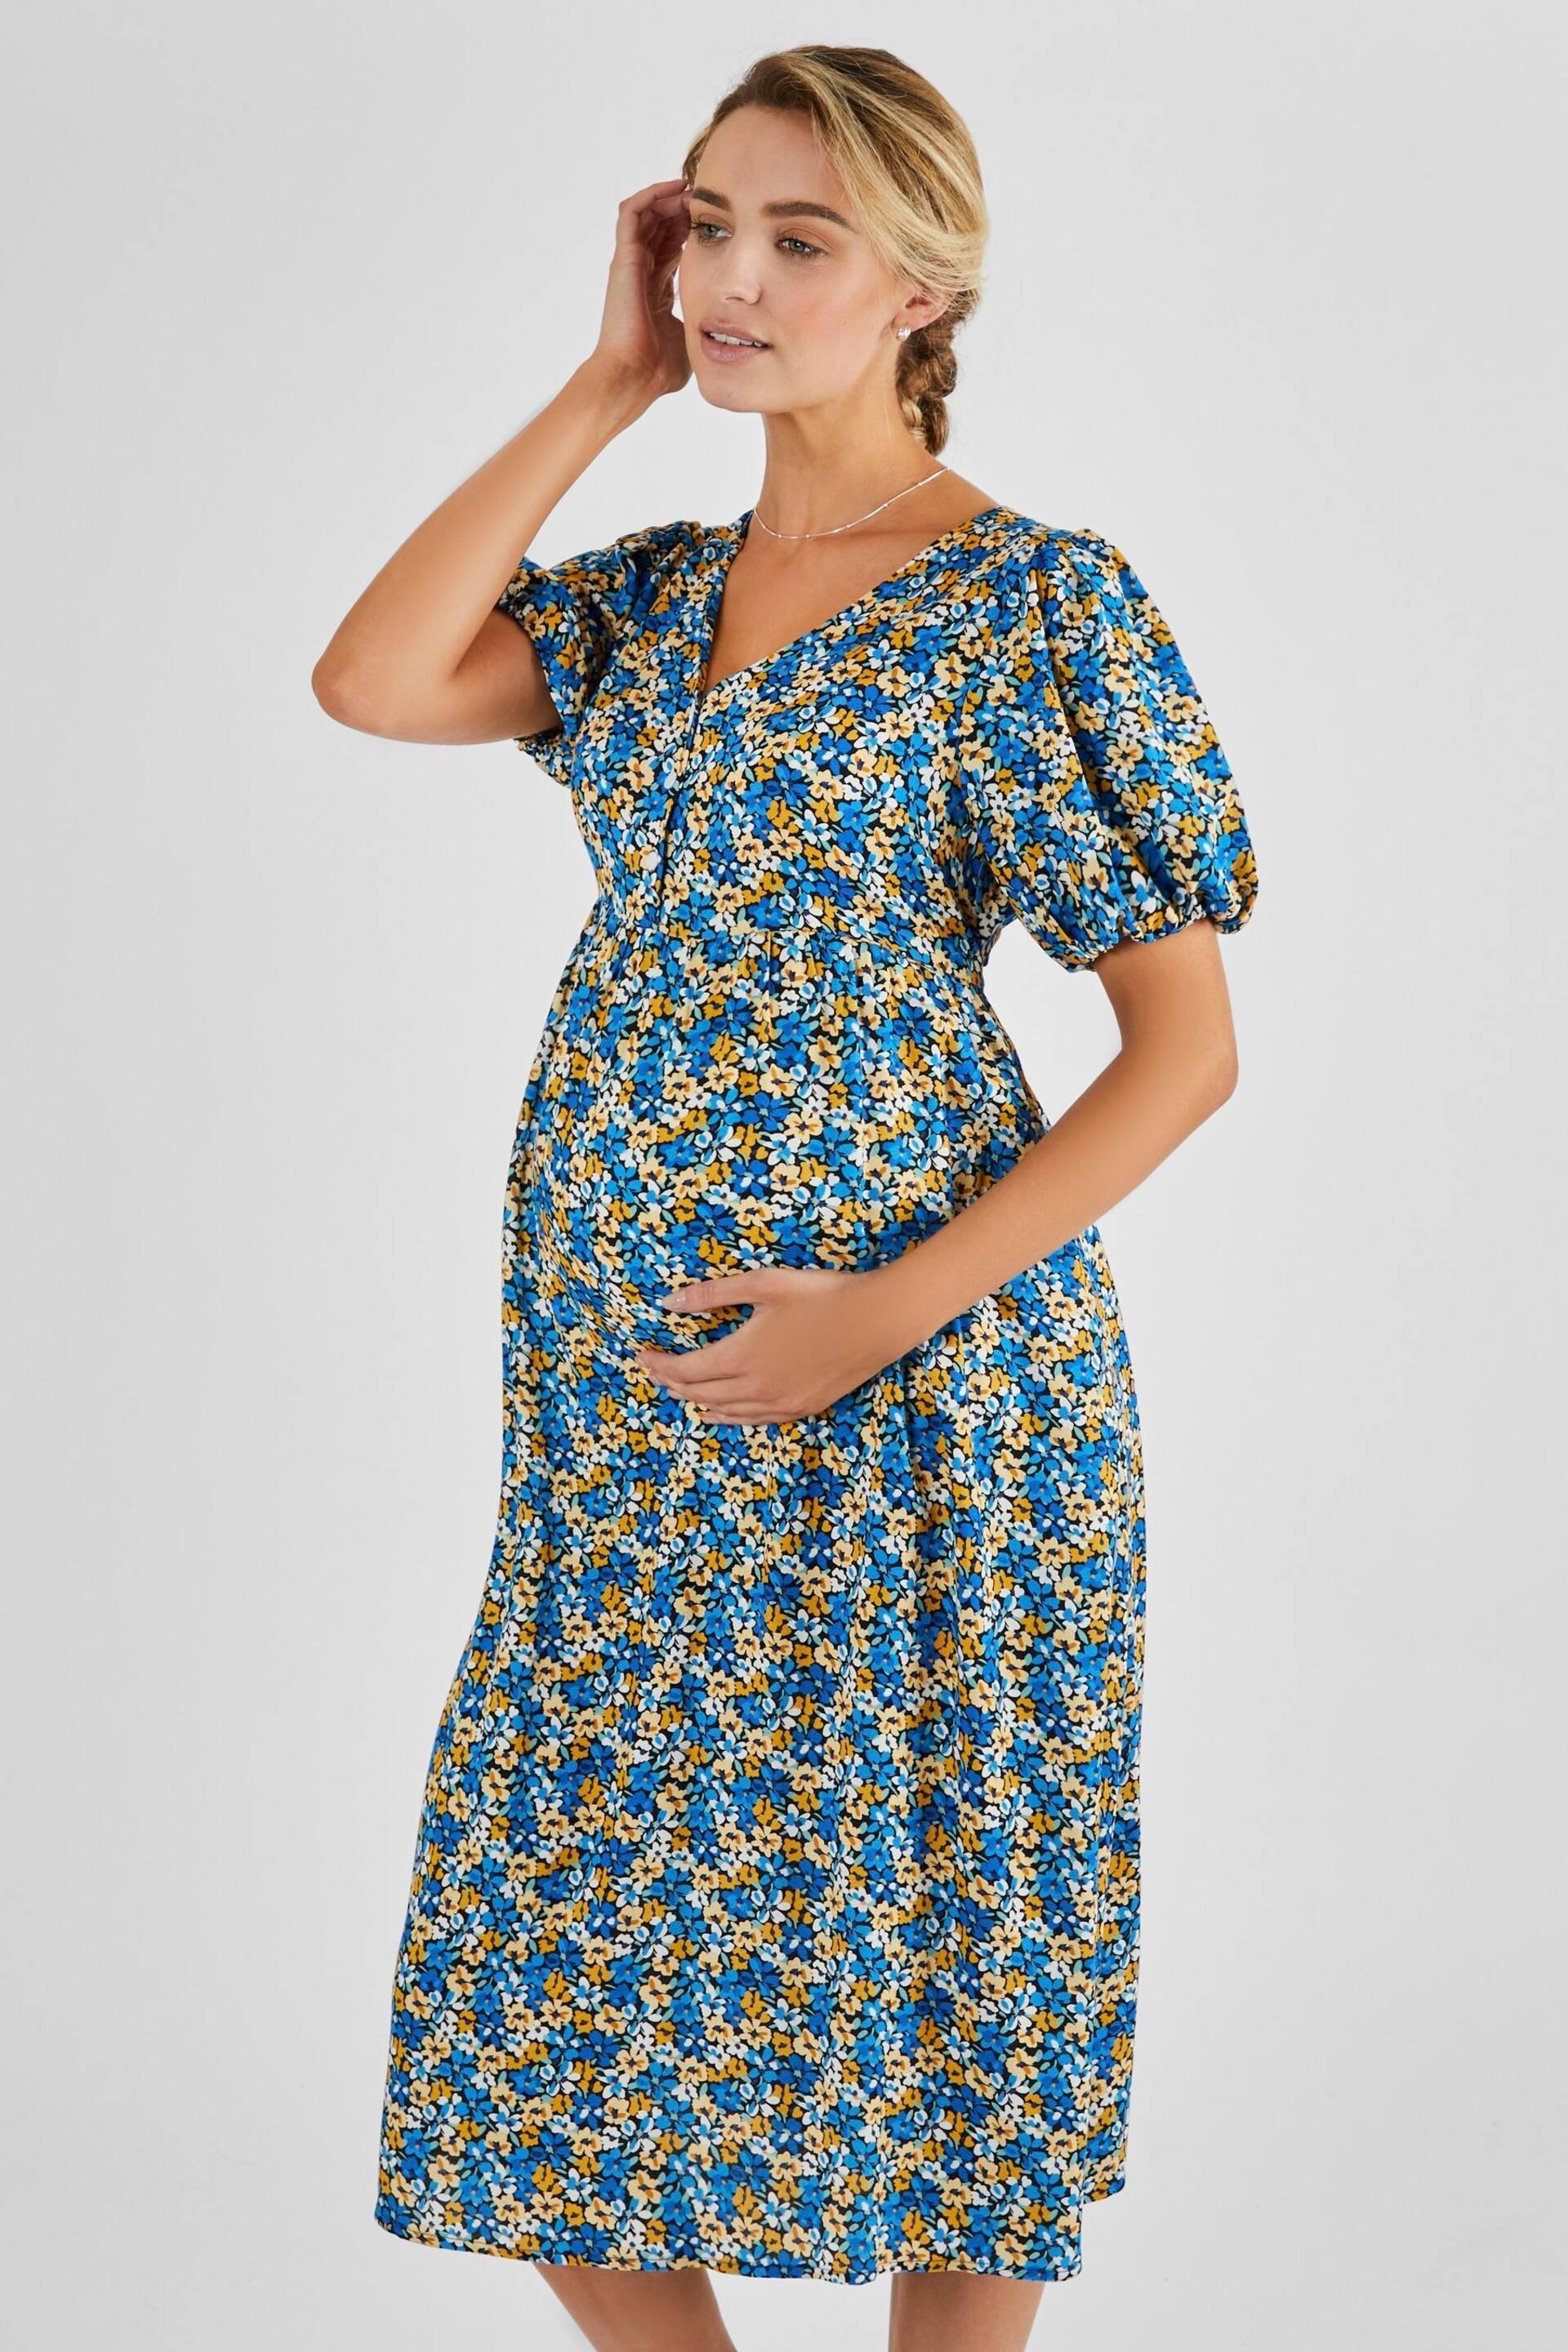 JoJo Maman Bébé Blue Yellow Floral Puff Sleeve Maternity Midi Dress - Image 3 of 5